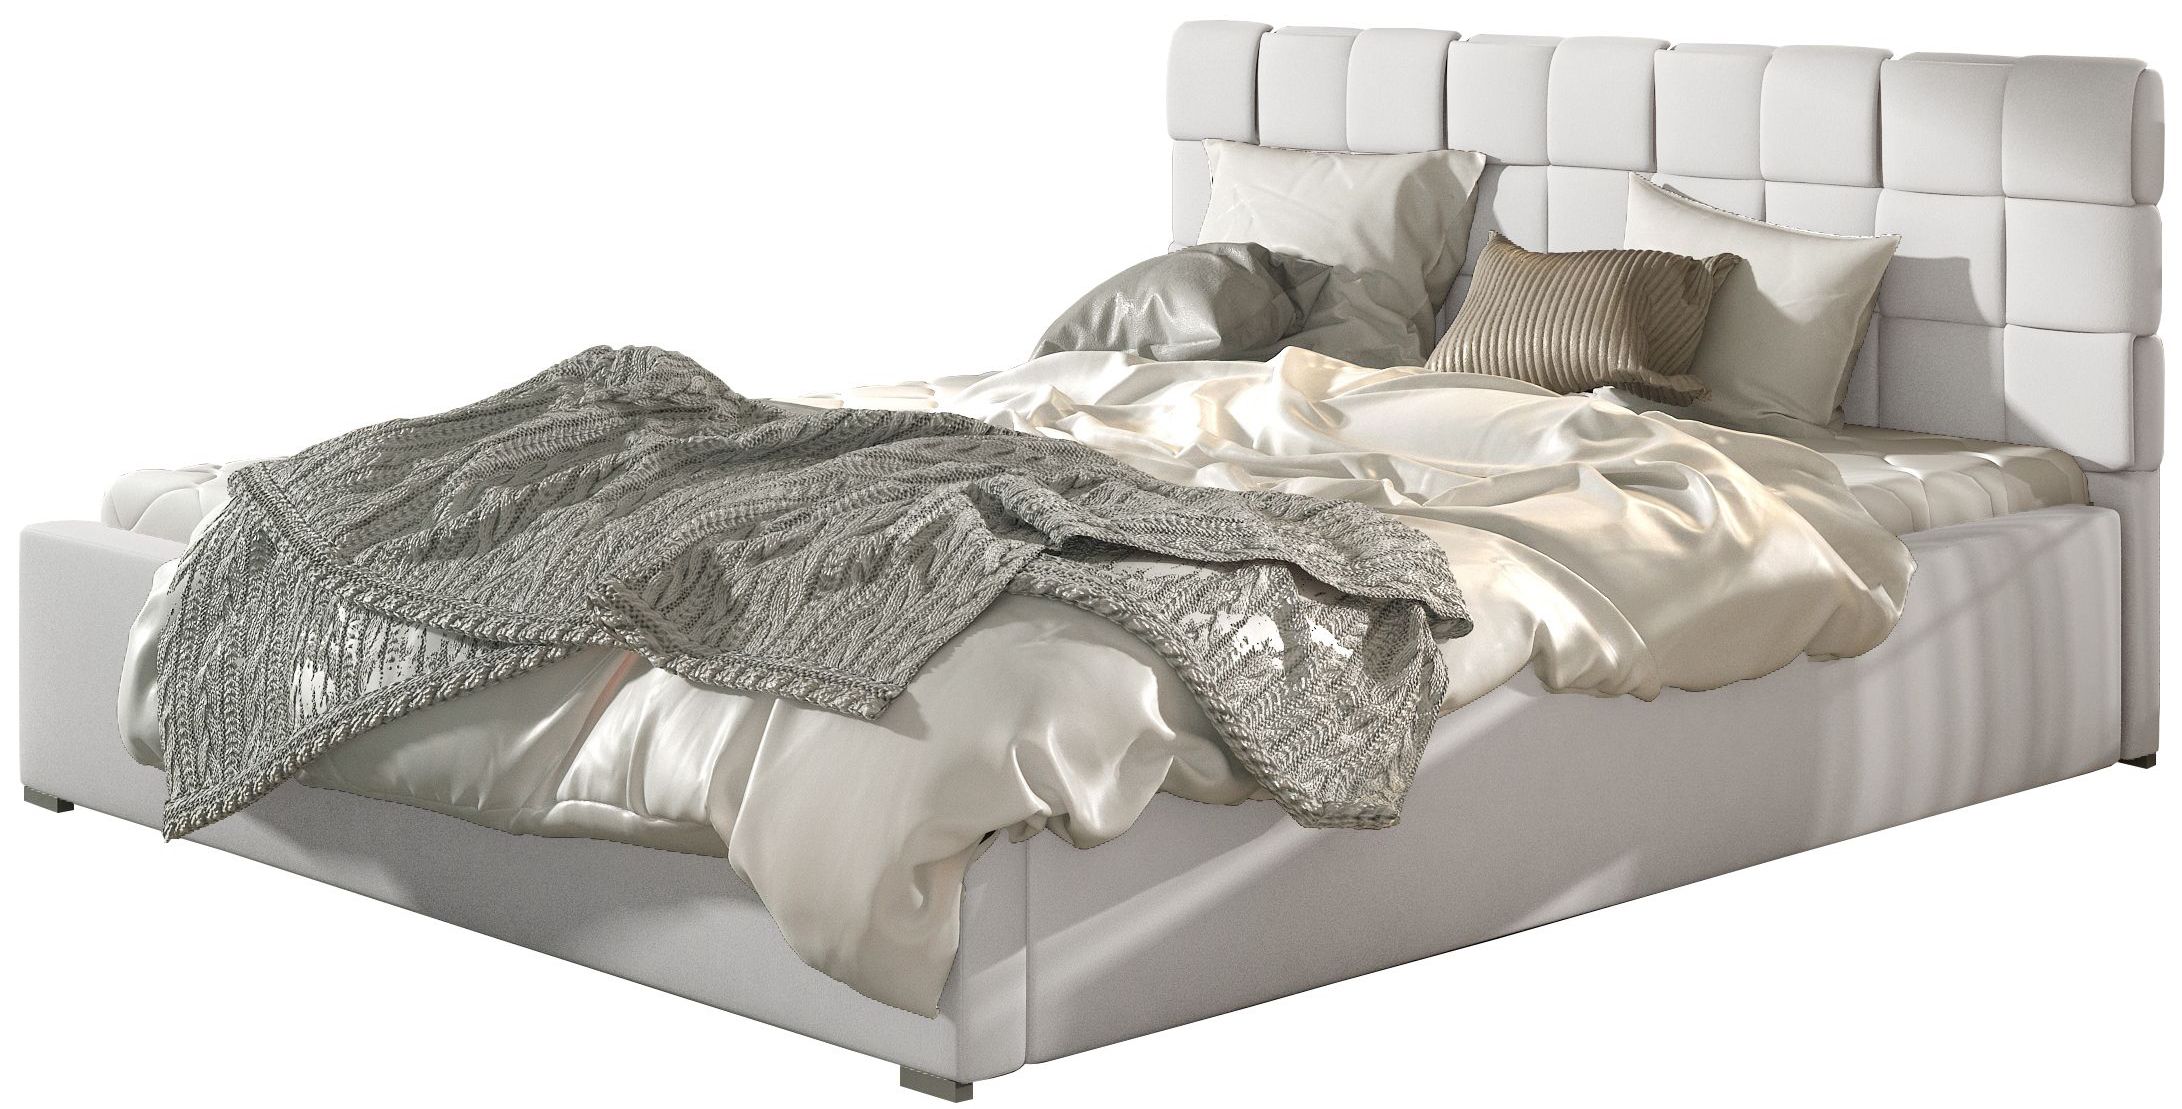 PoliHome Επενδυμένο κρεβάτι Grady-140 x 200-Χωρίς μηχανισμό ανύψωσης-Leuko